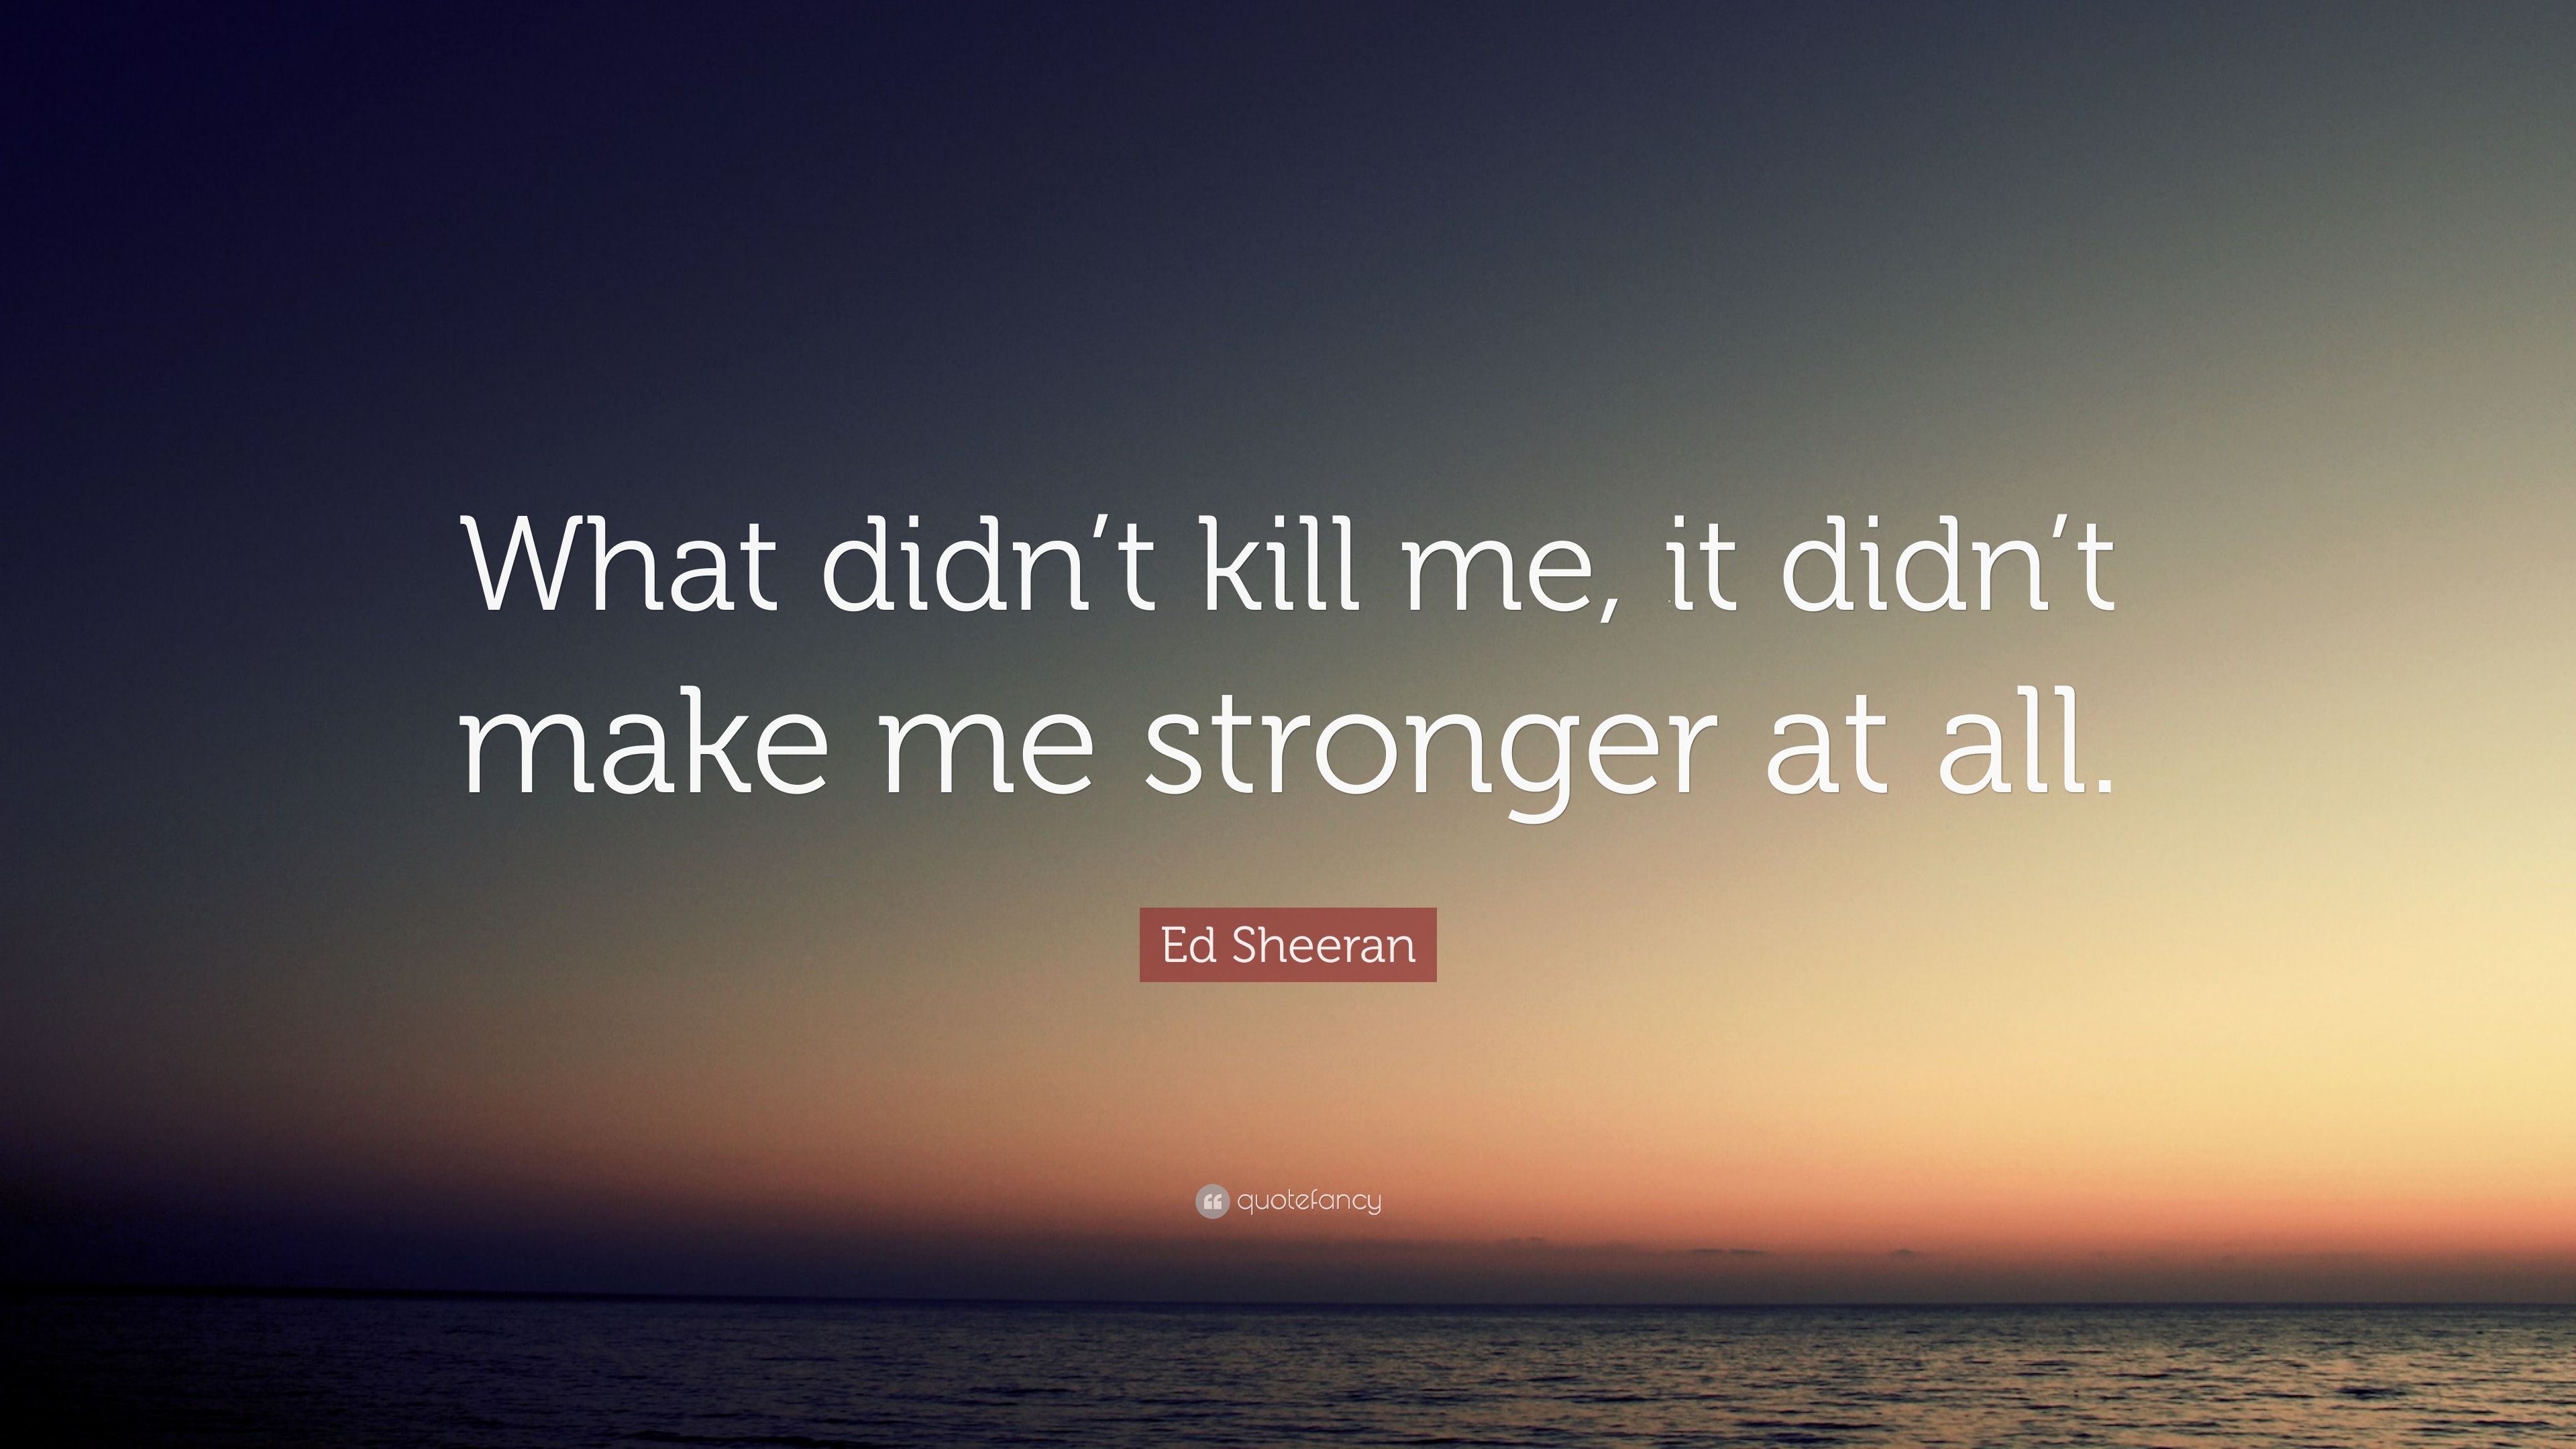 Ed Sheeran Quote “What didn t kill me it didn t